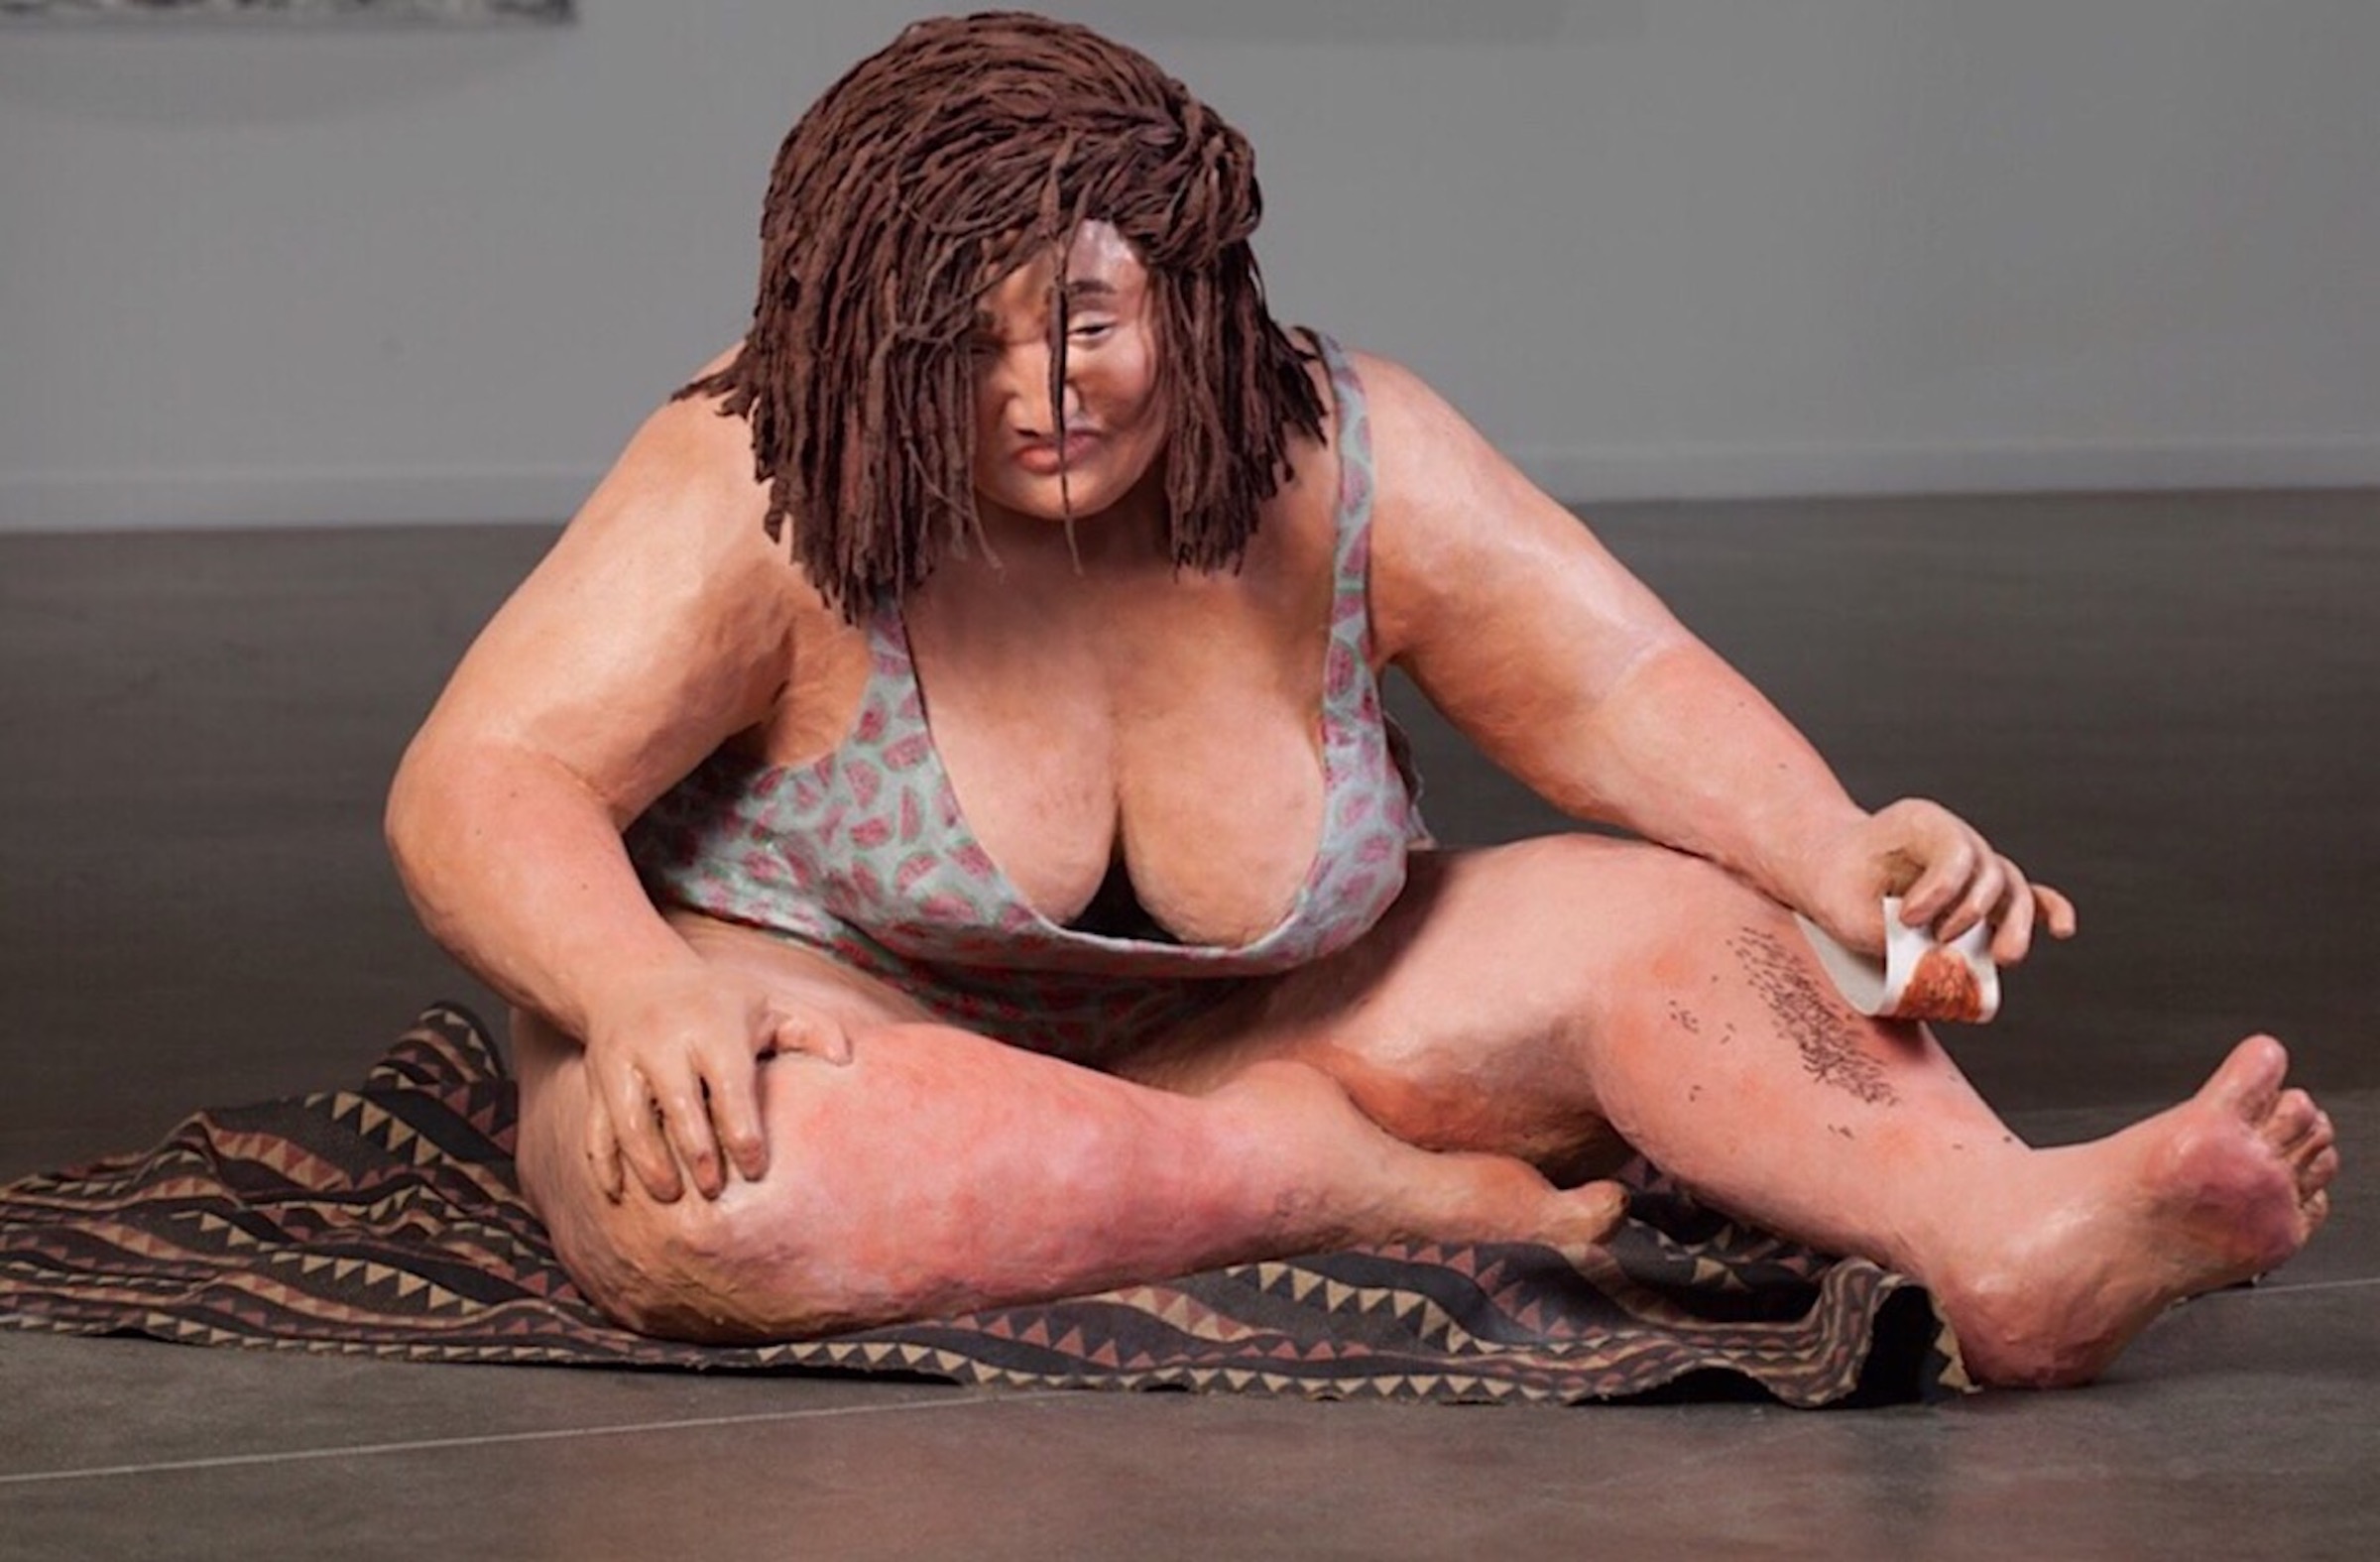 Plus-size art celebrates unrepresented bodies and challenge taboos - CNN